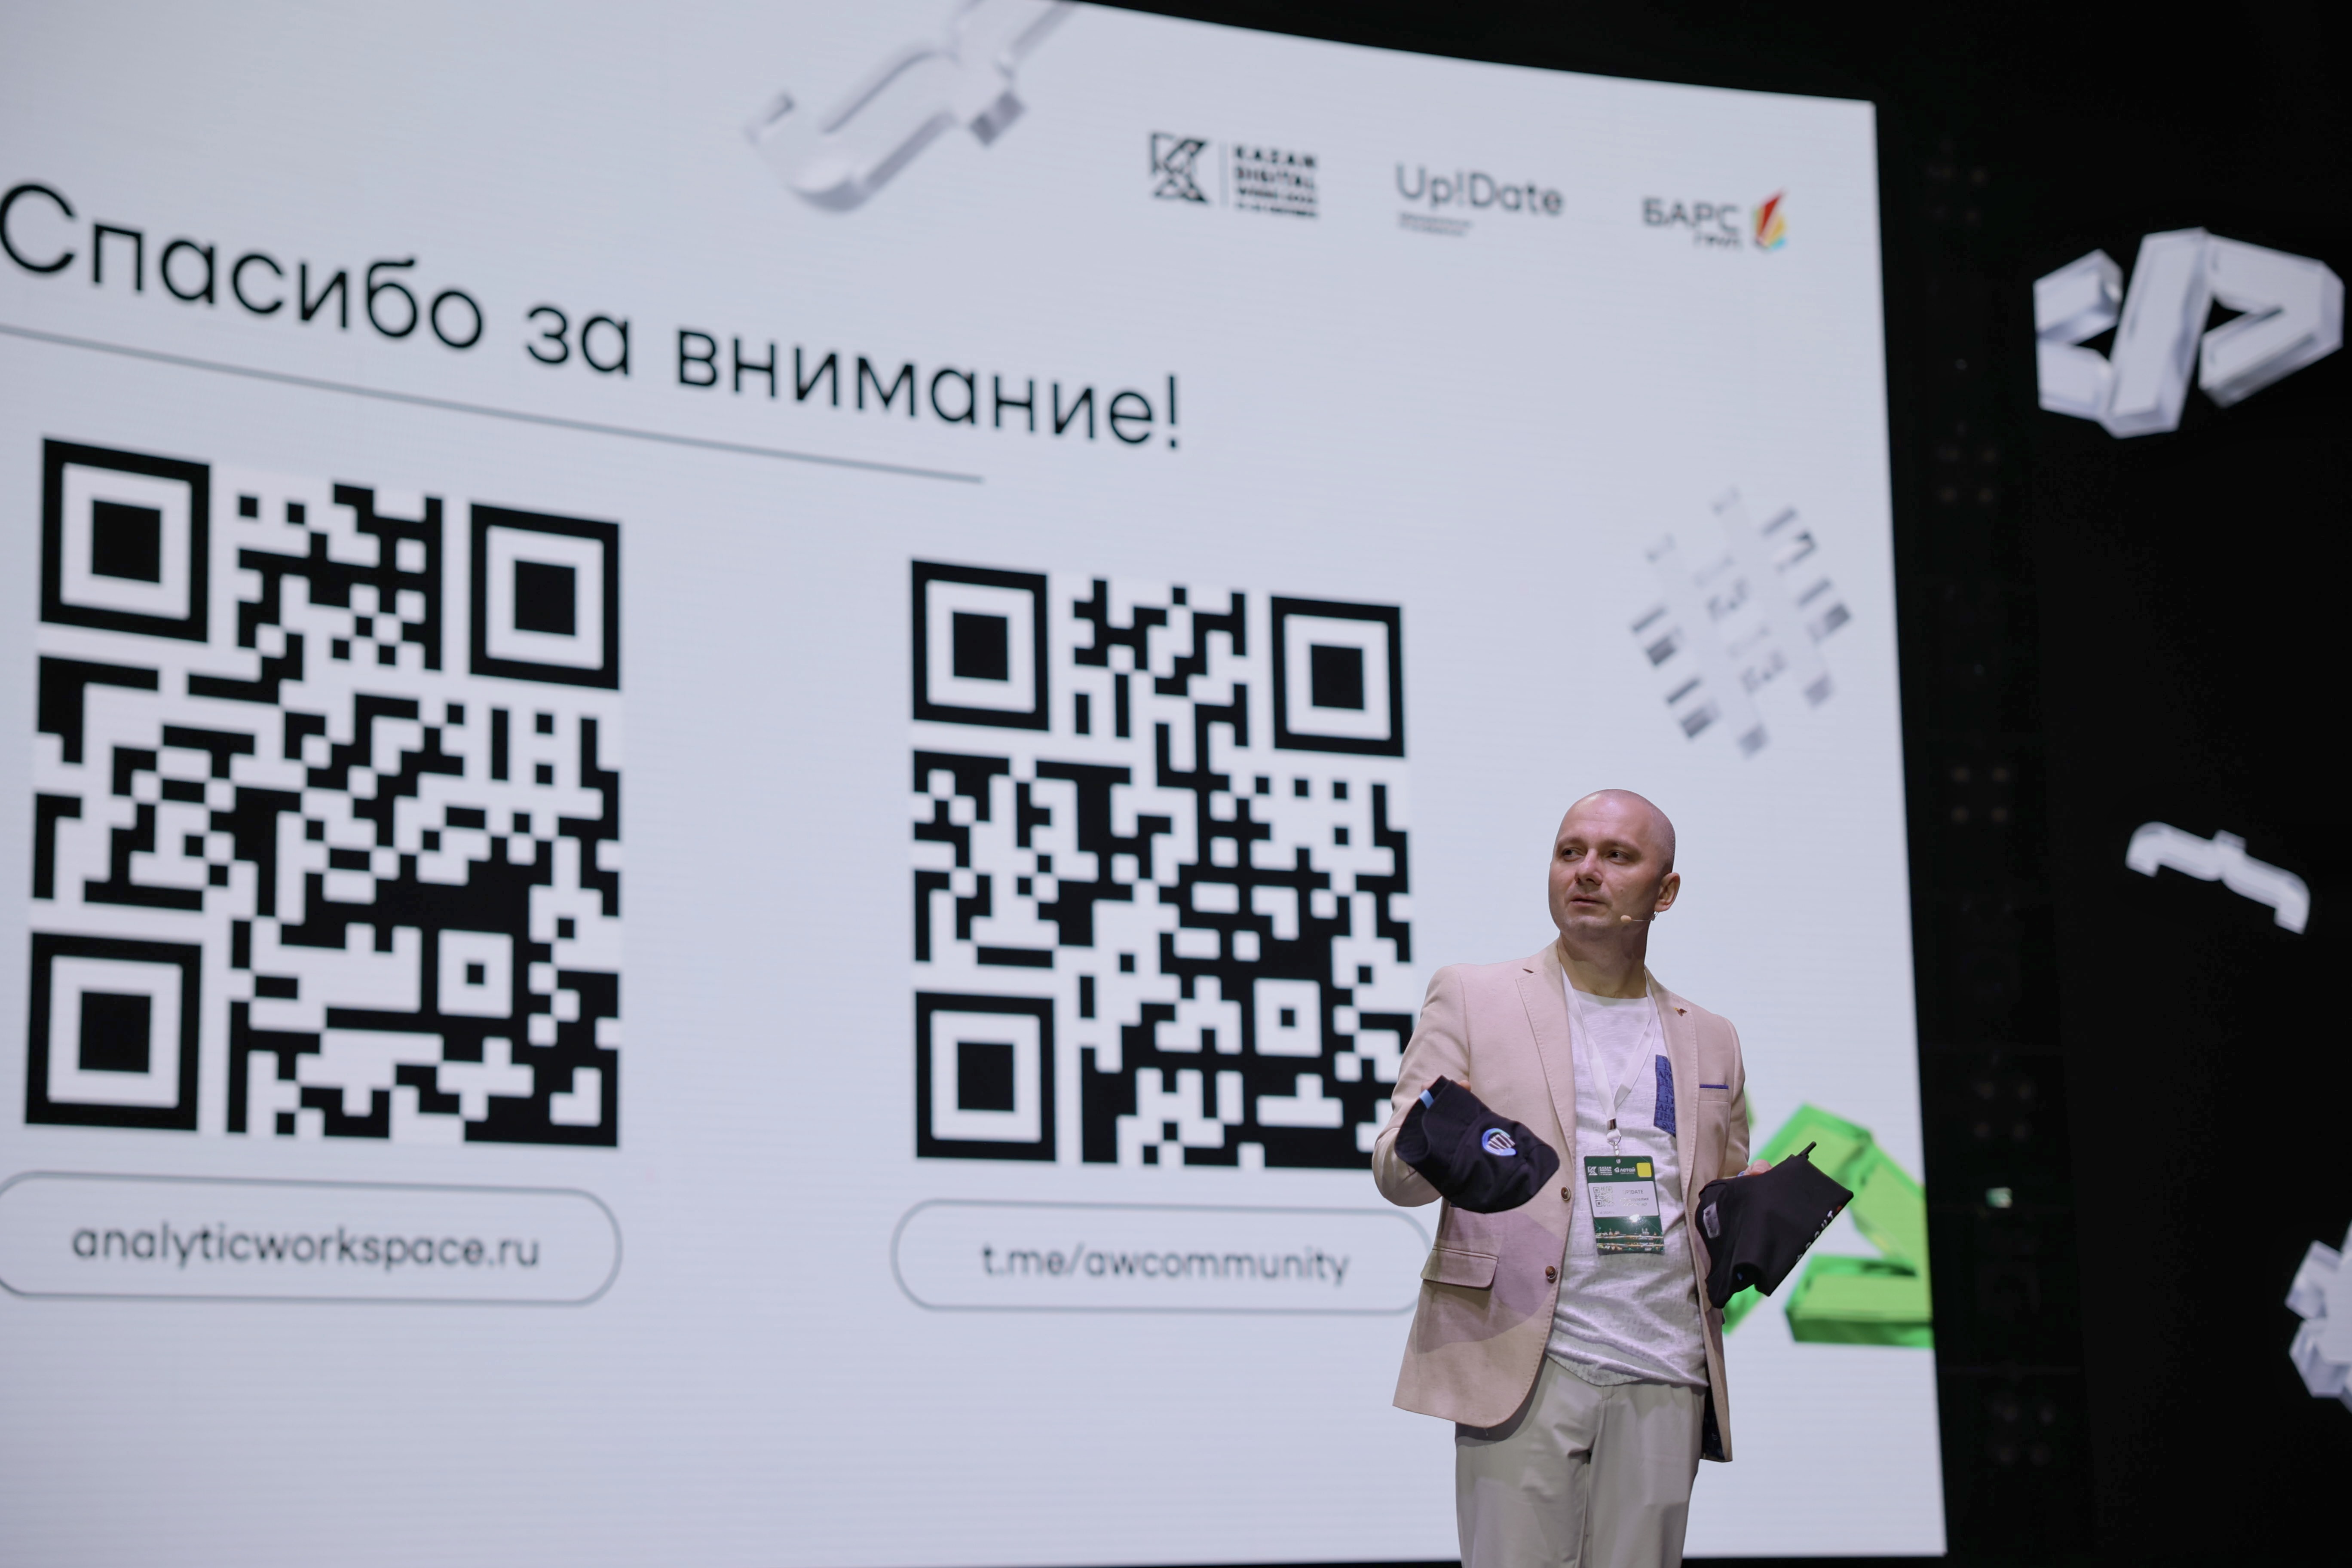 Александр Кварацхелия рассказал собравшимся о BI-аналитике и Backend-разработке